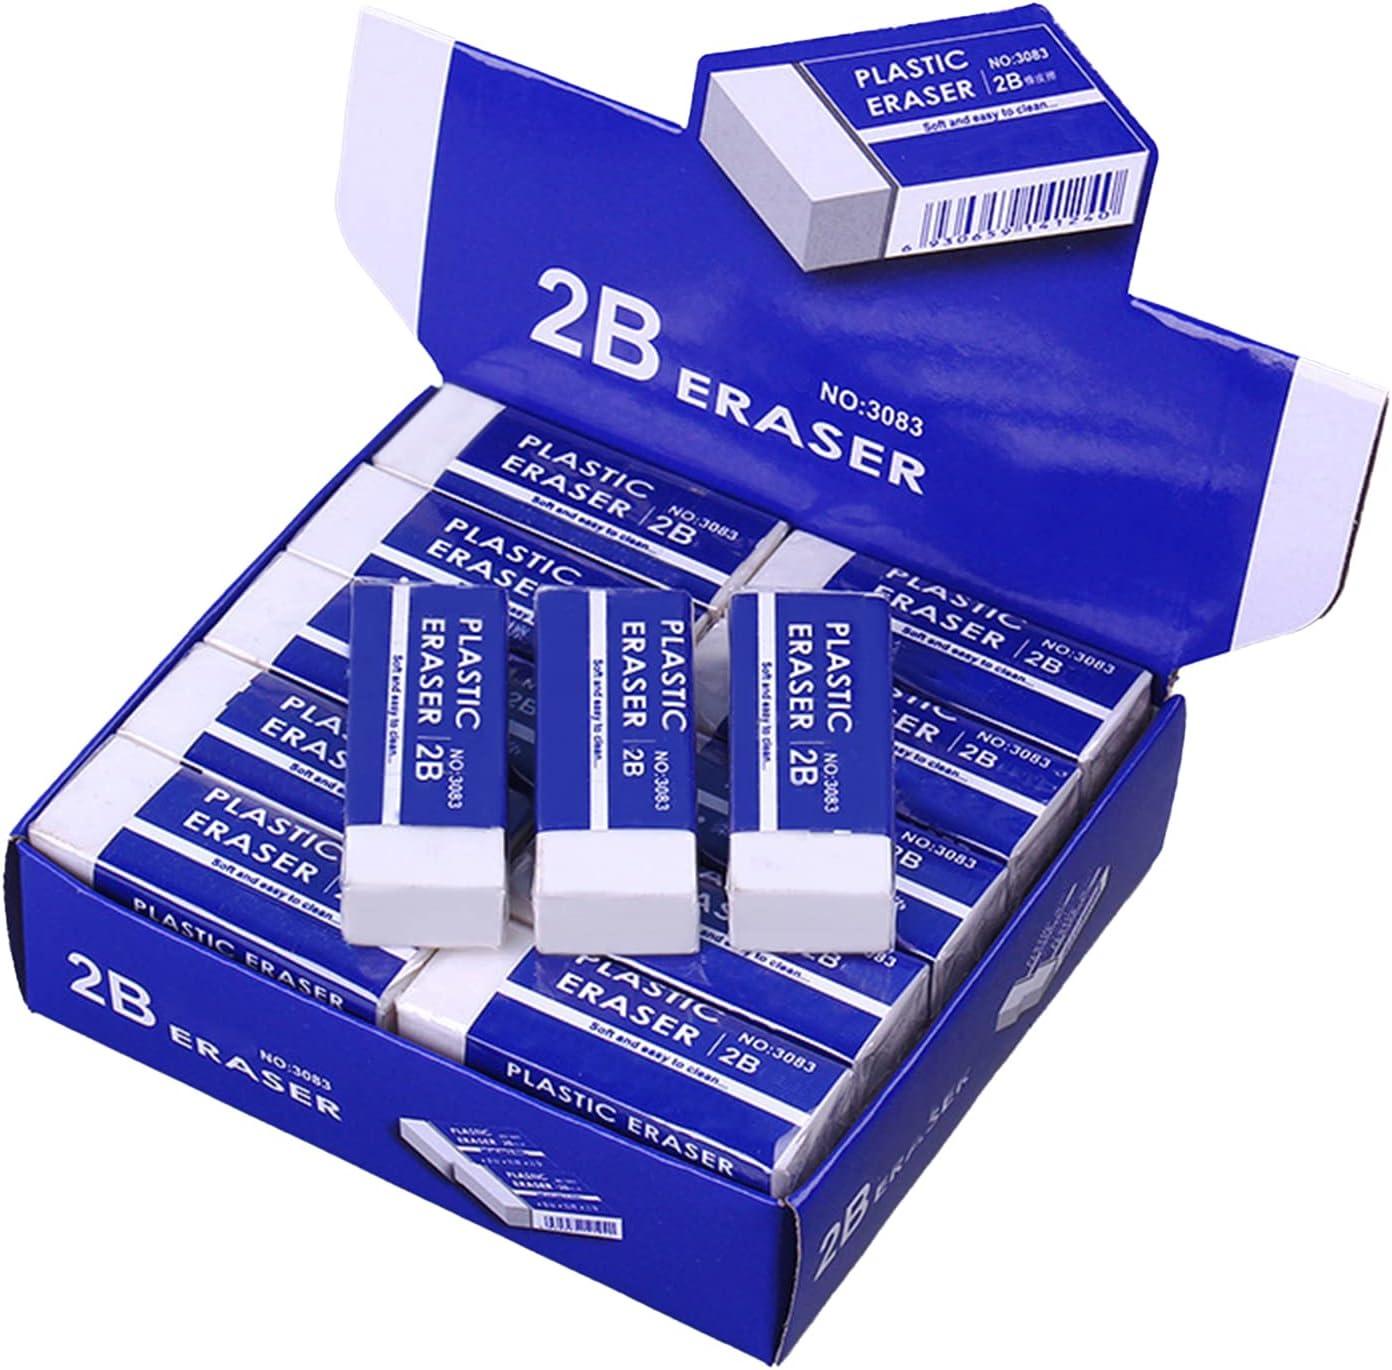 ciouyaos 30 pack pencil eraser soft white erasers for kids erase easily eraser bulk for artists teachers